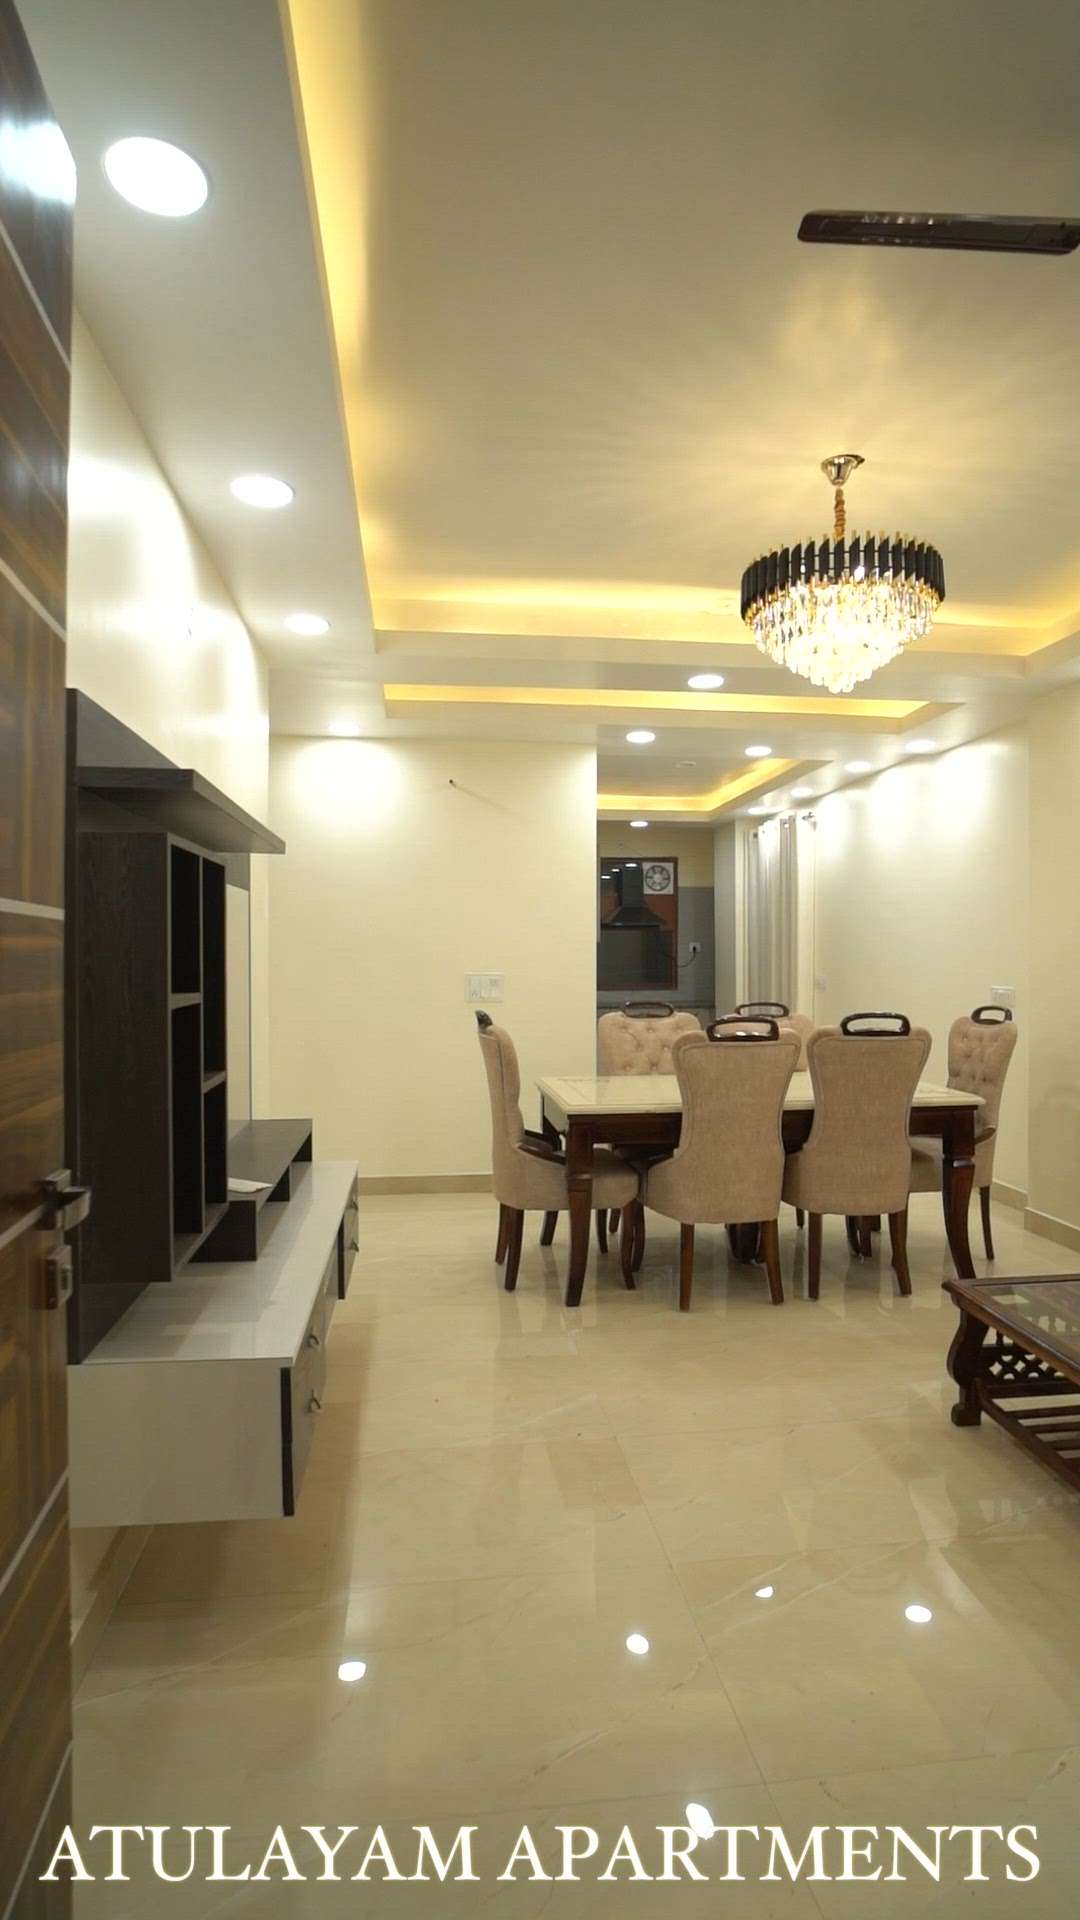 this interior by Me, mob.   8872543952 
4 bhk Ready dwarka mod New Delhi # #
mob. 8872543952